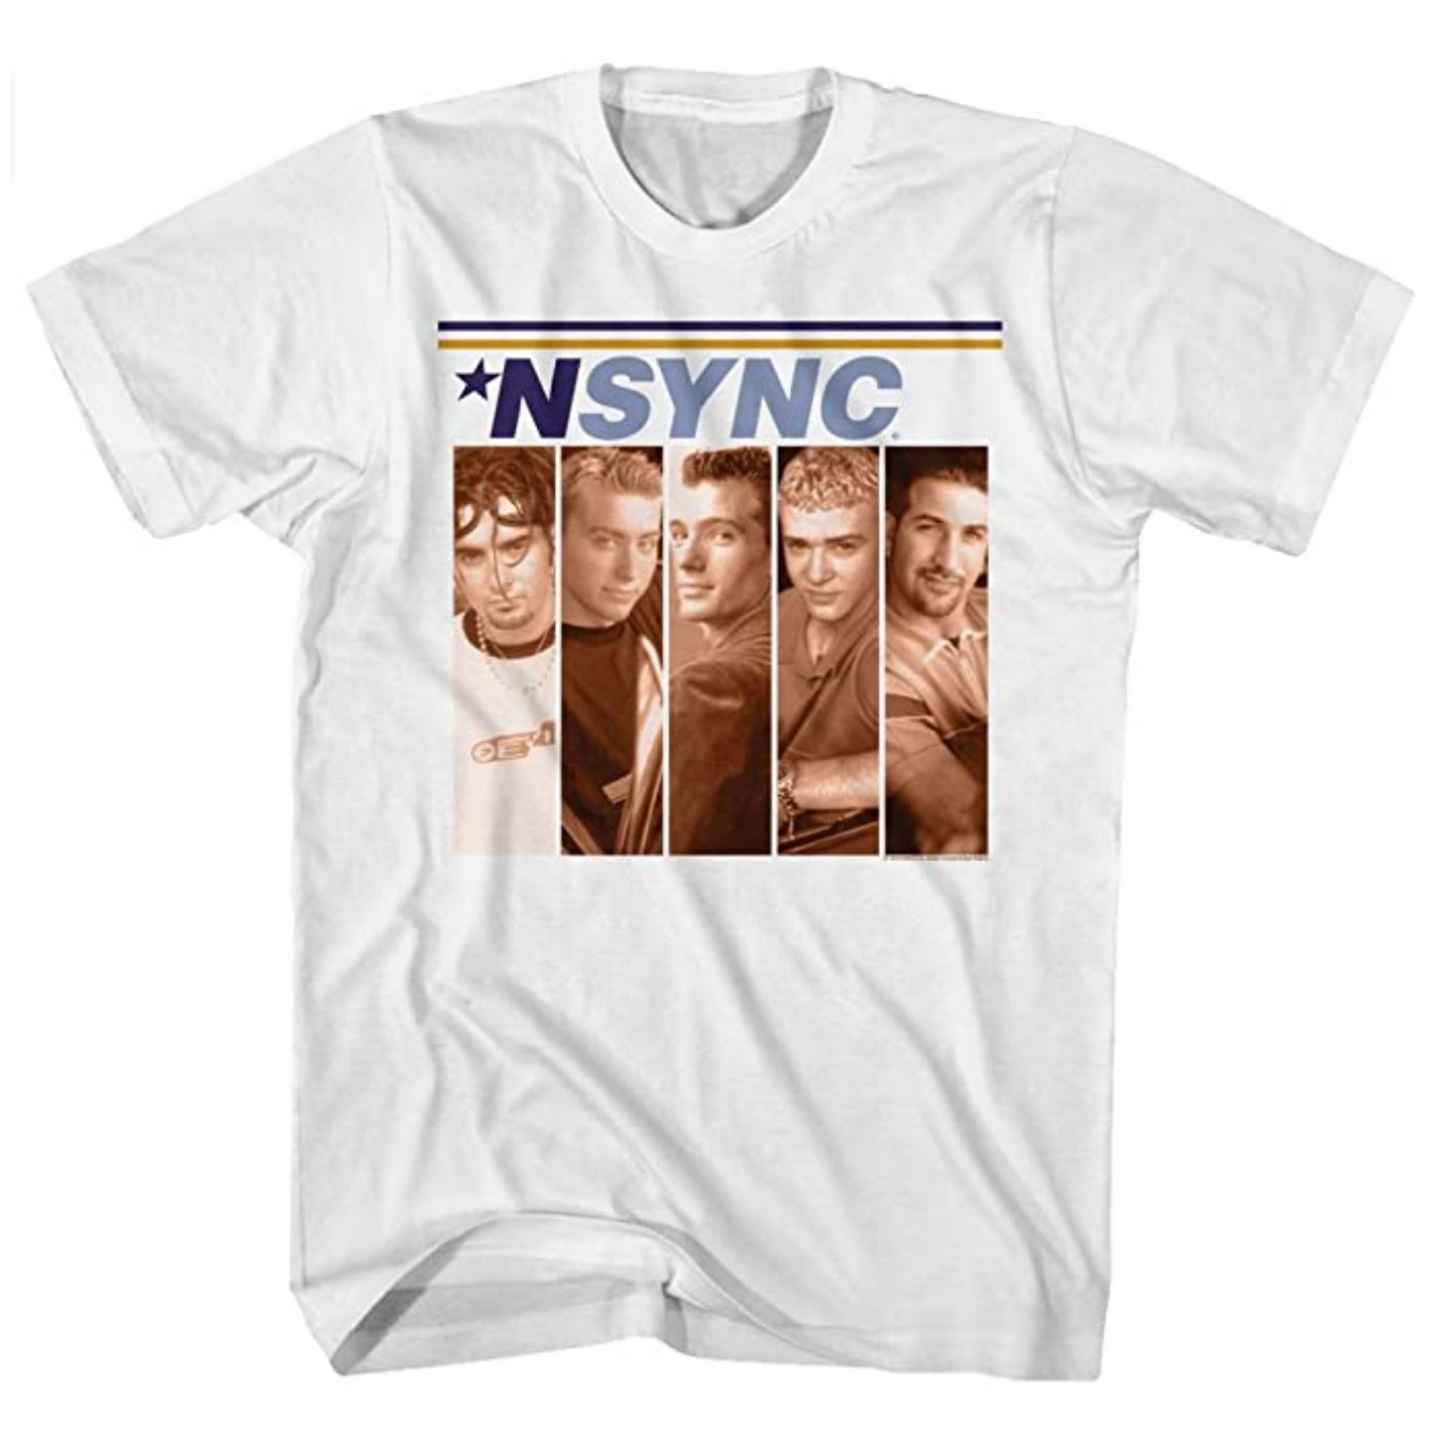 *NSYNC Album Cover Vintage Style Graphic T-Shirt